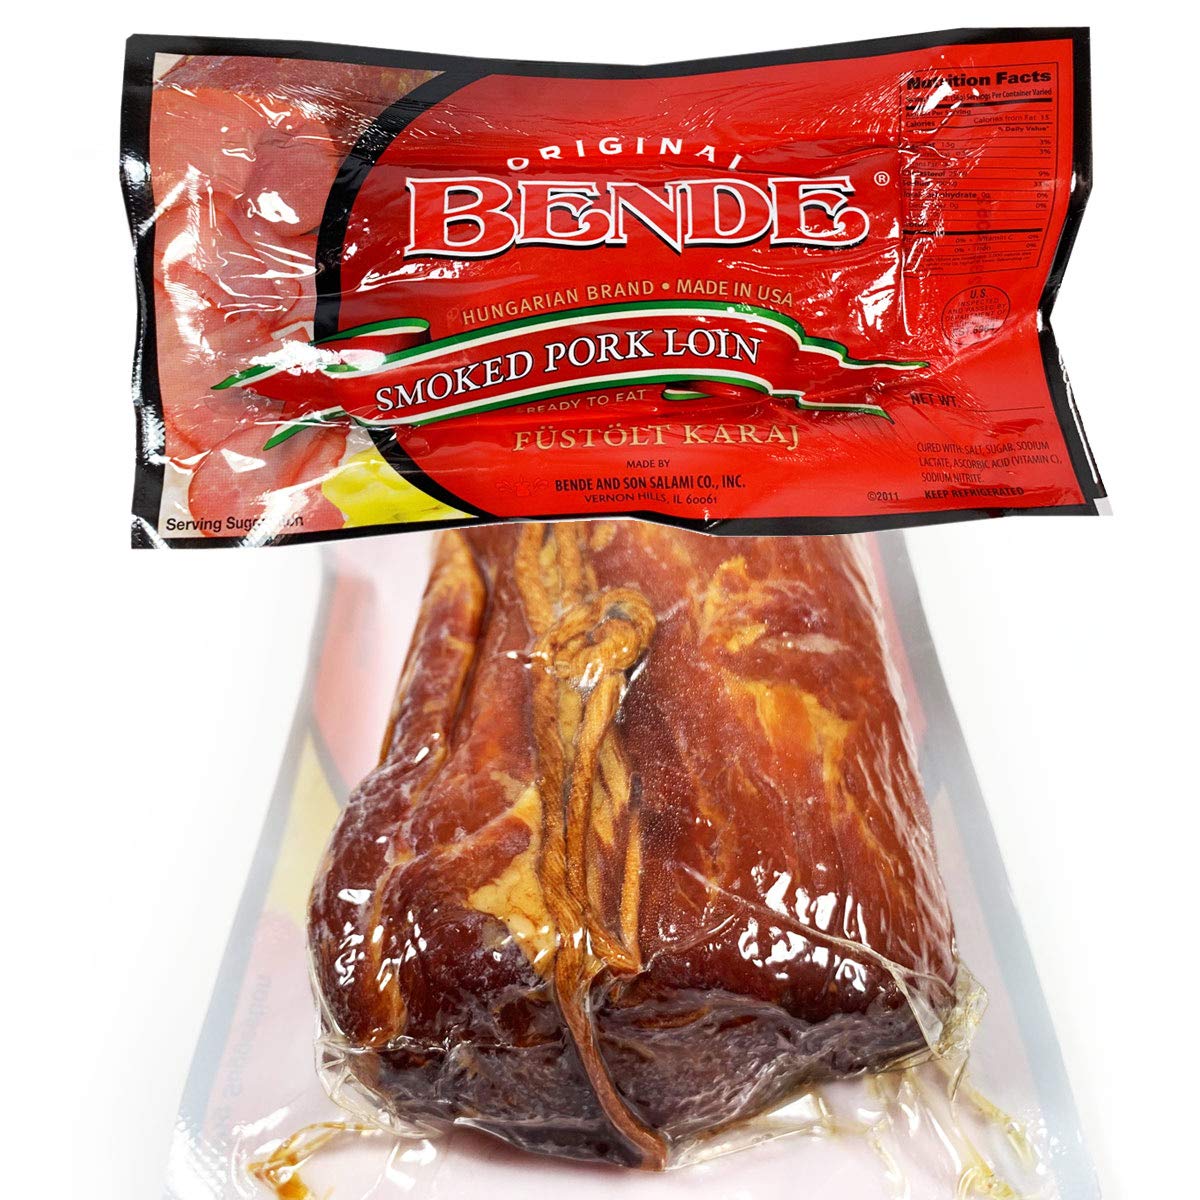 Smoked Boneless Pork Loin "Karaj", 1 - 1.5 lb